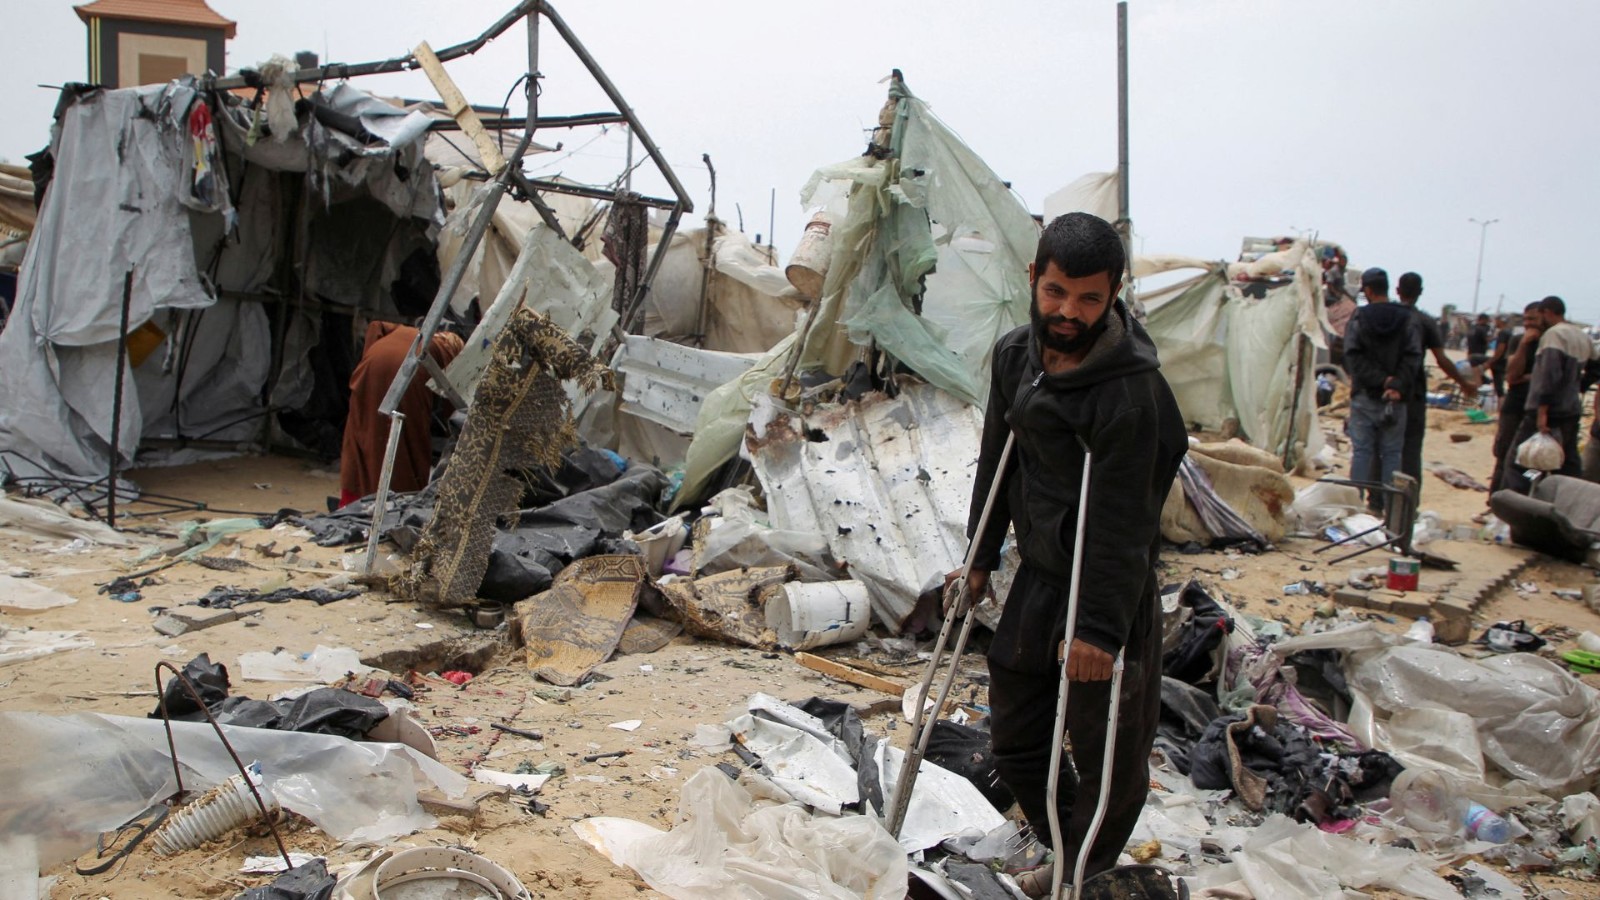 Palestinians inspect a tent camp damaged in an Israeli strike on Rafah. /Hatem Khaled/Reuters